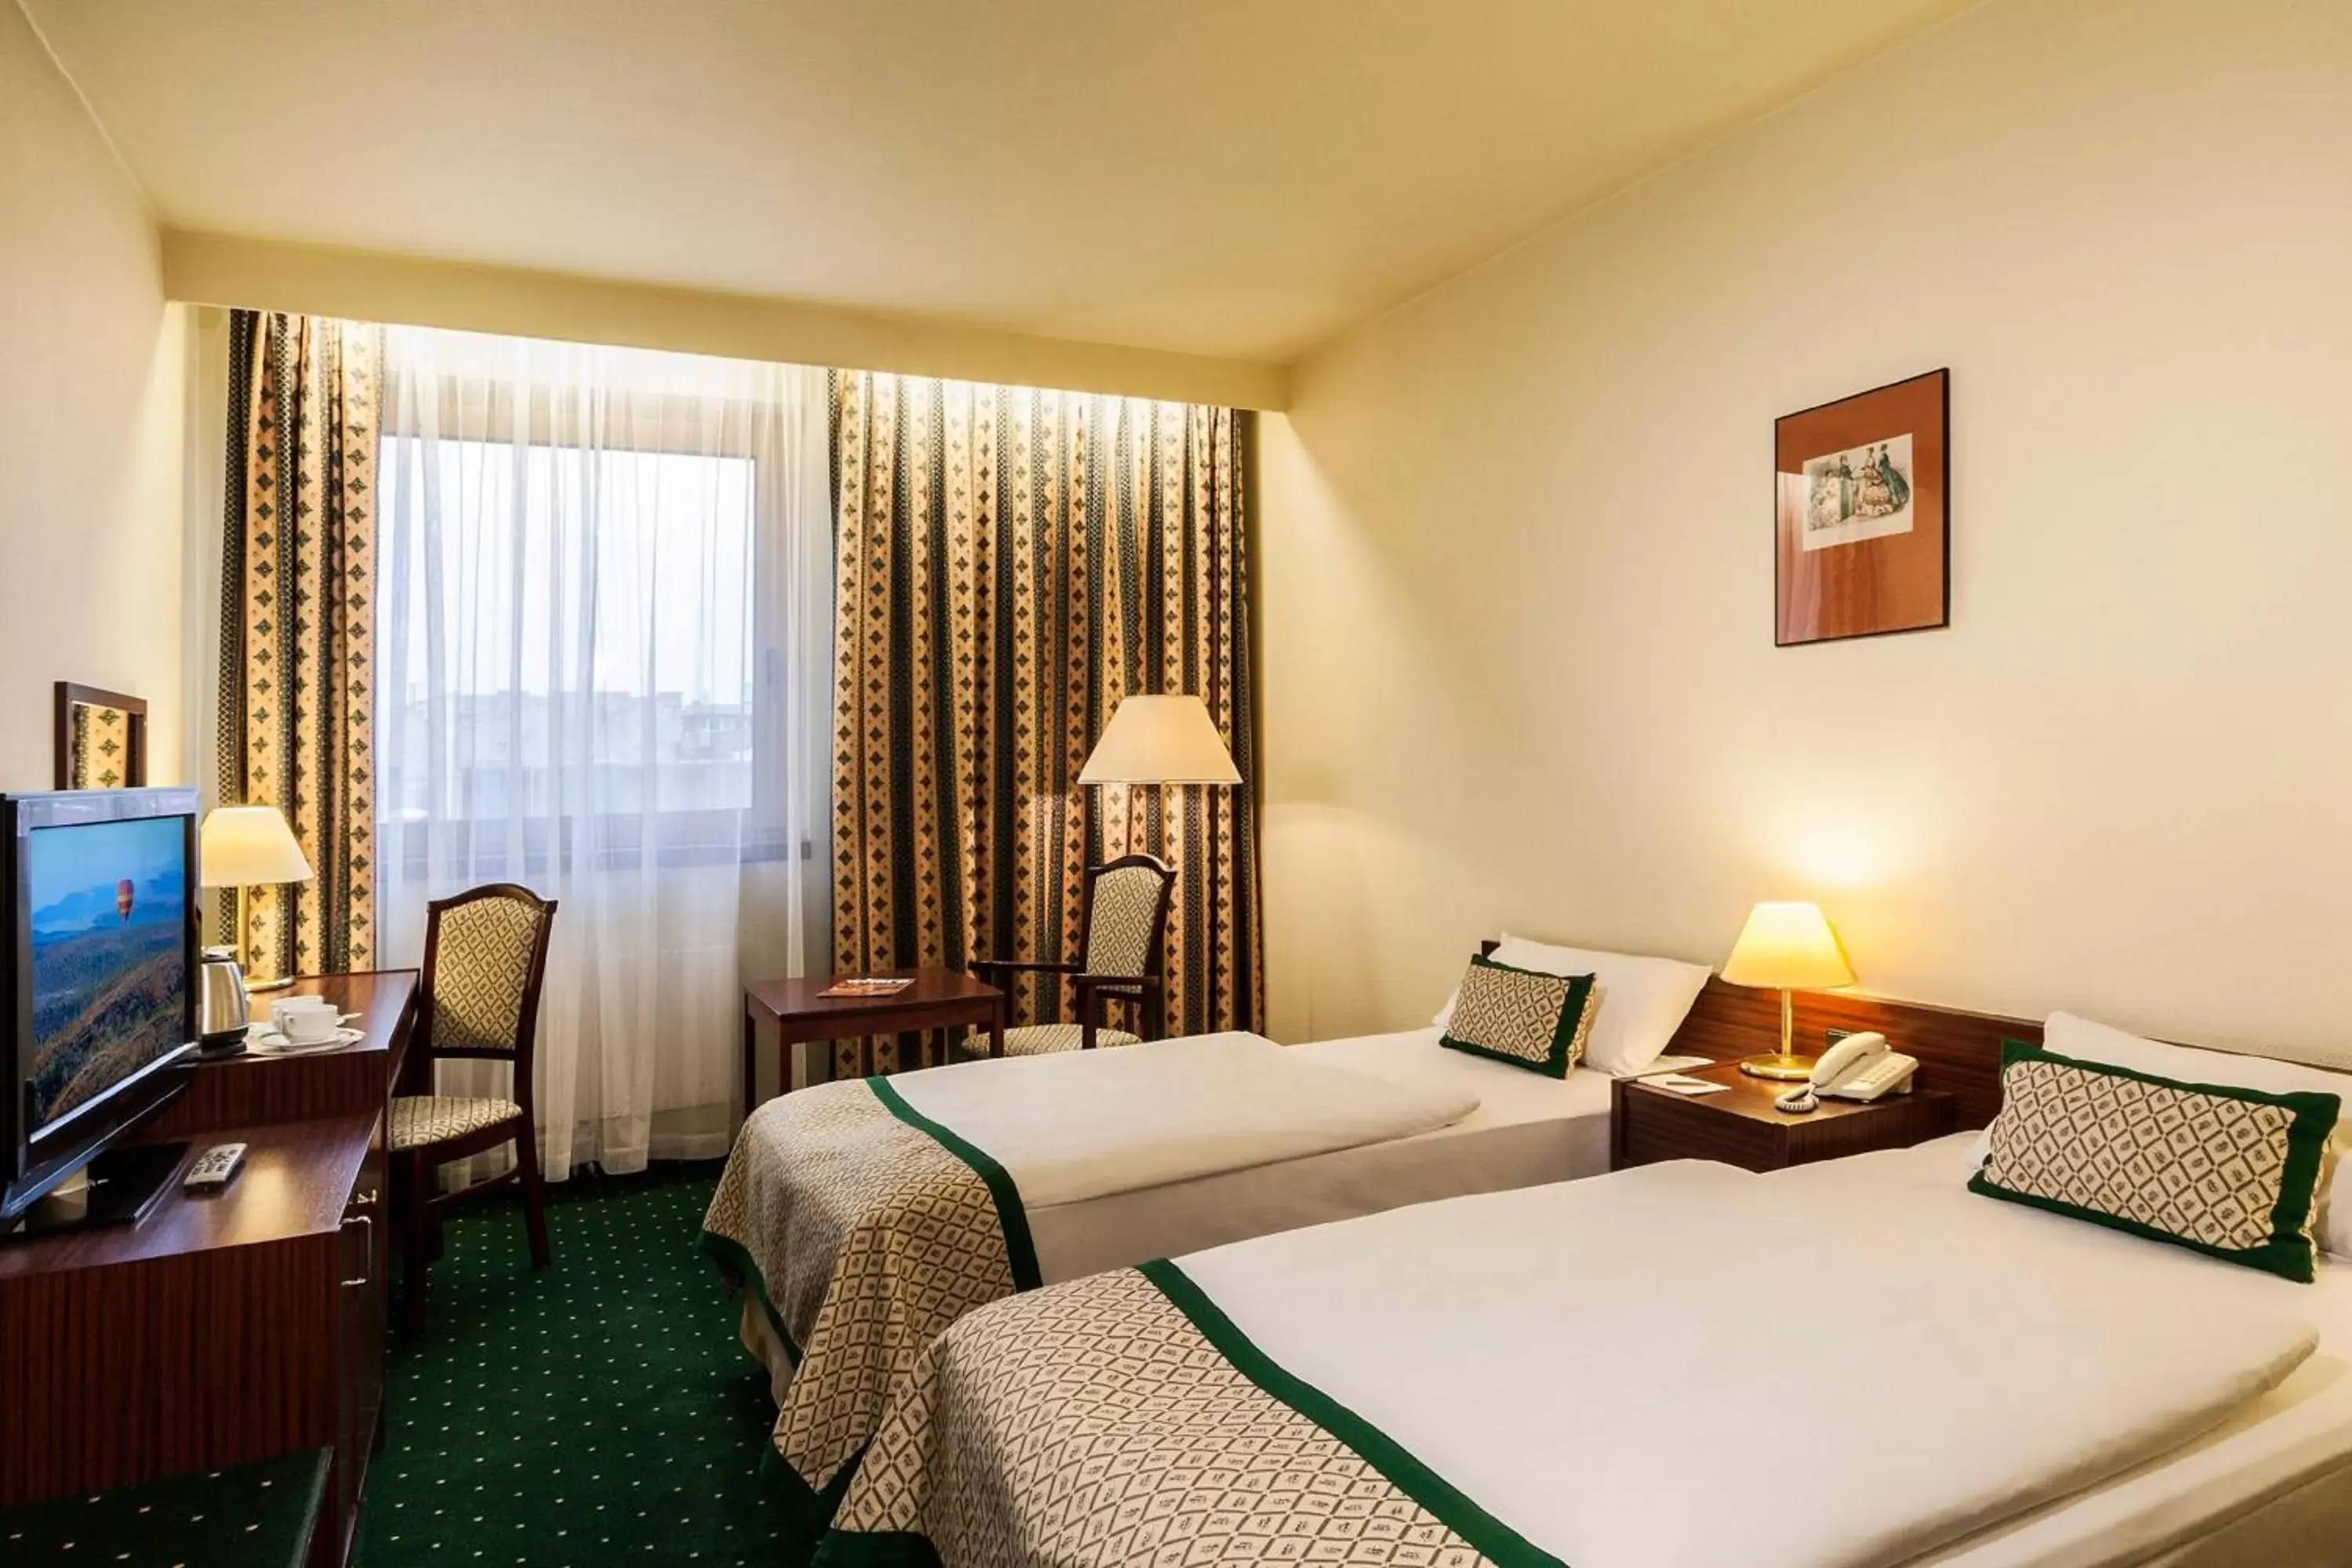 Twin Room in Danubius Hotel Hungaria City Center